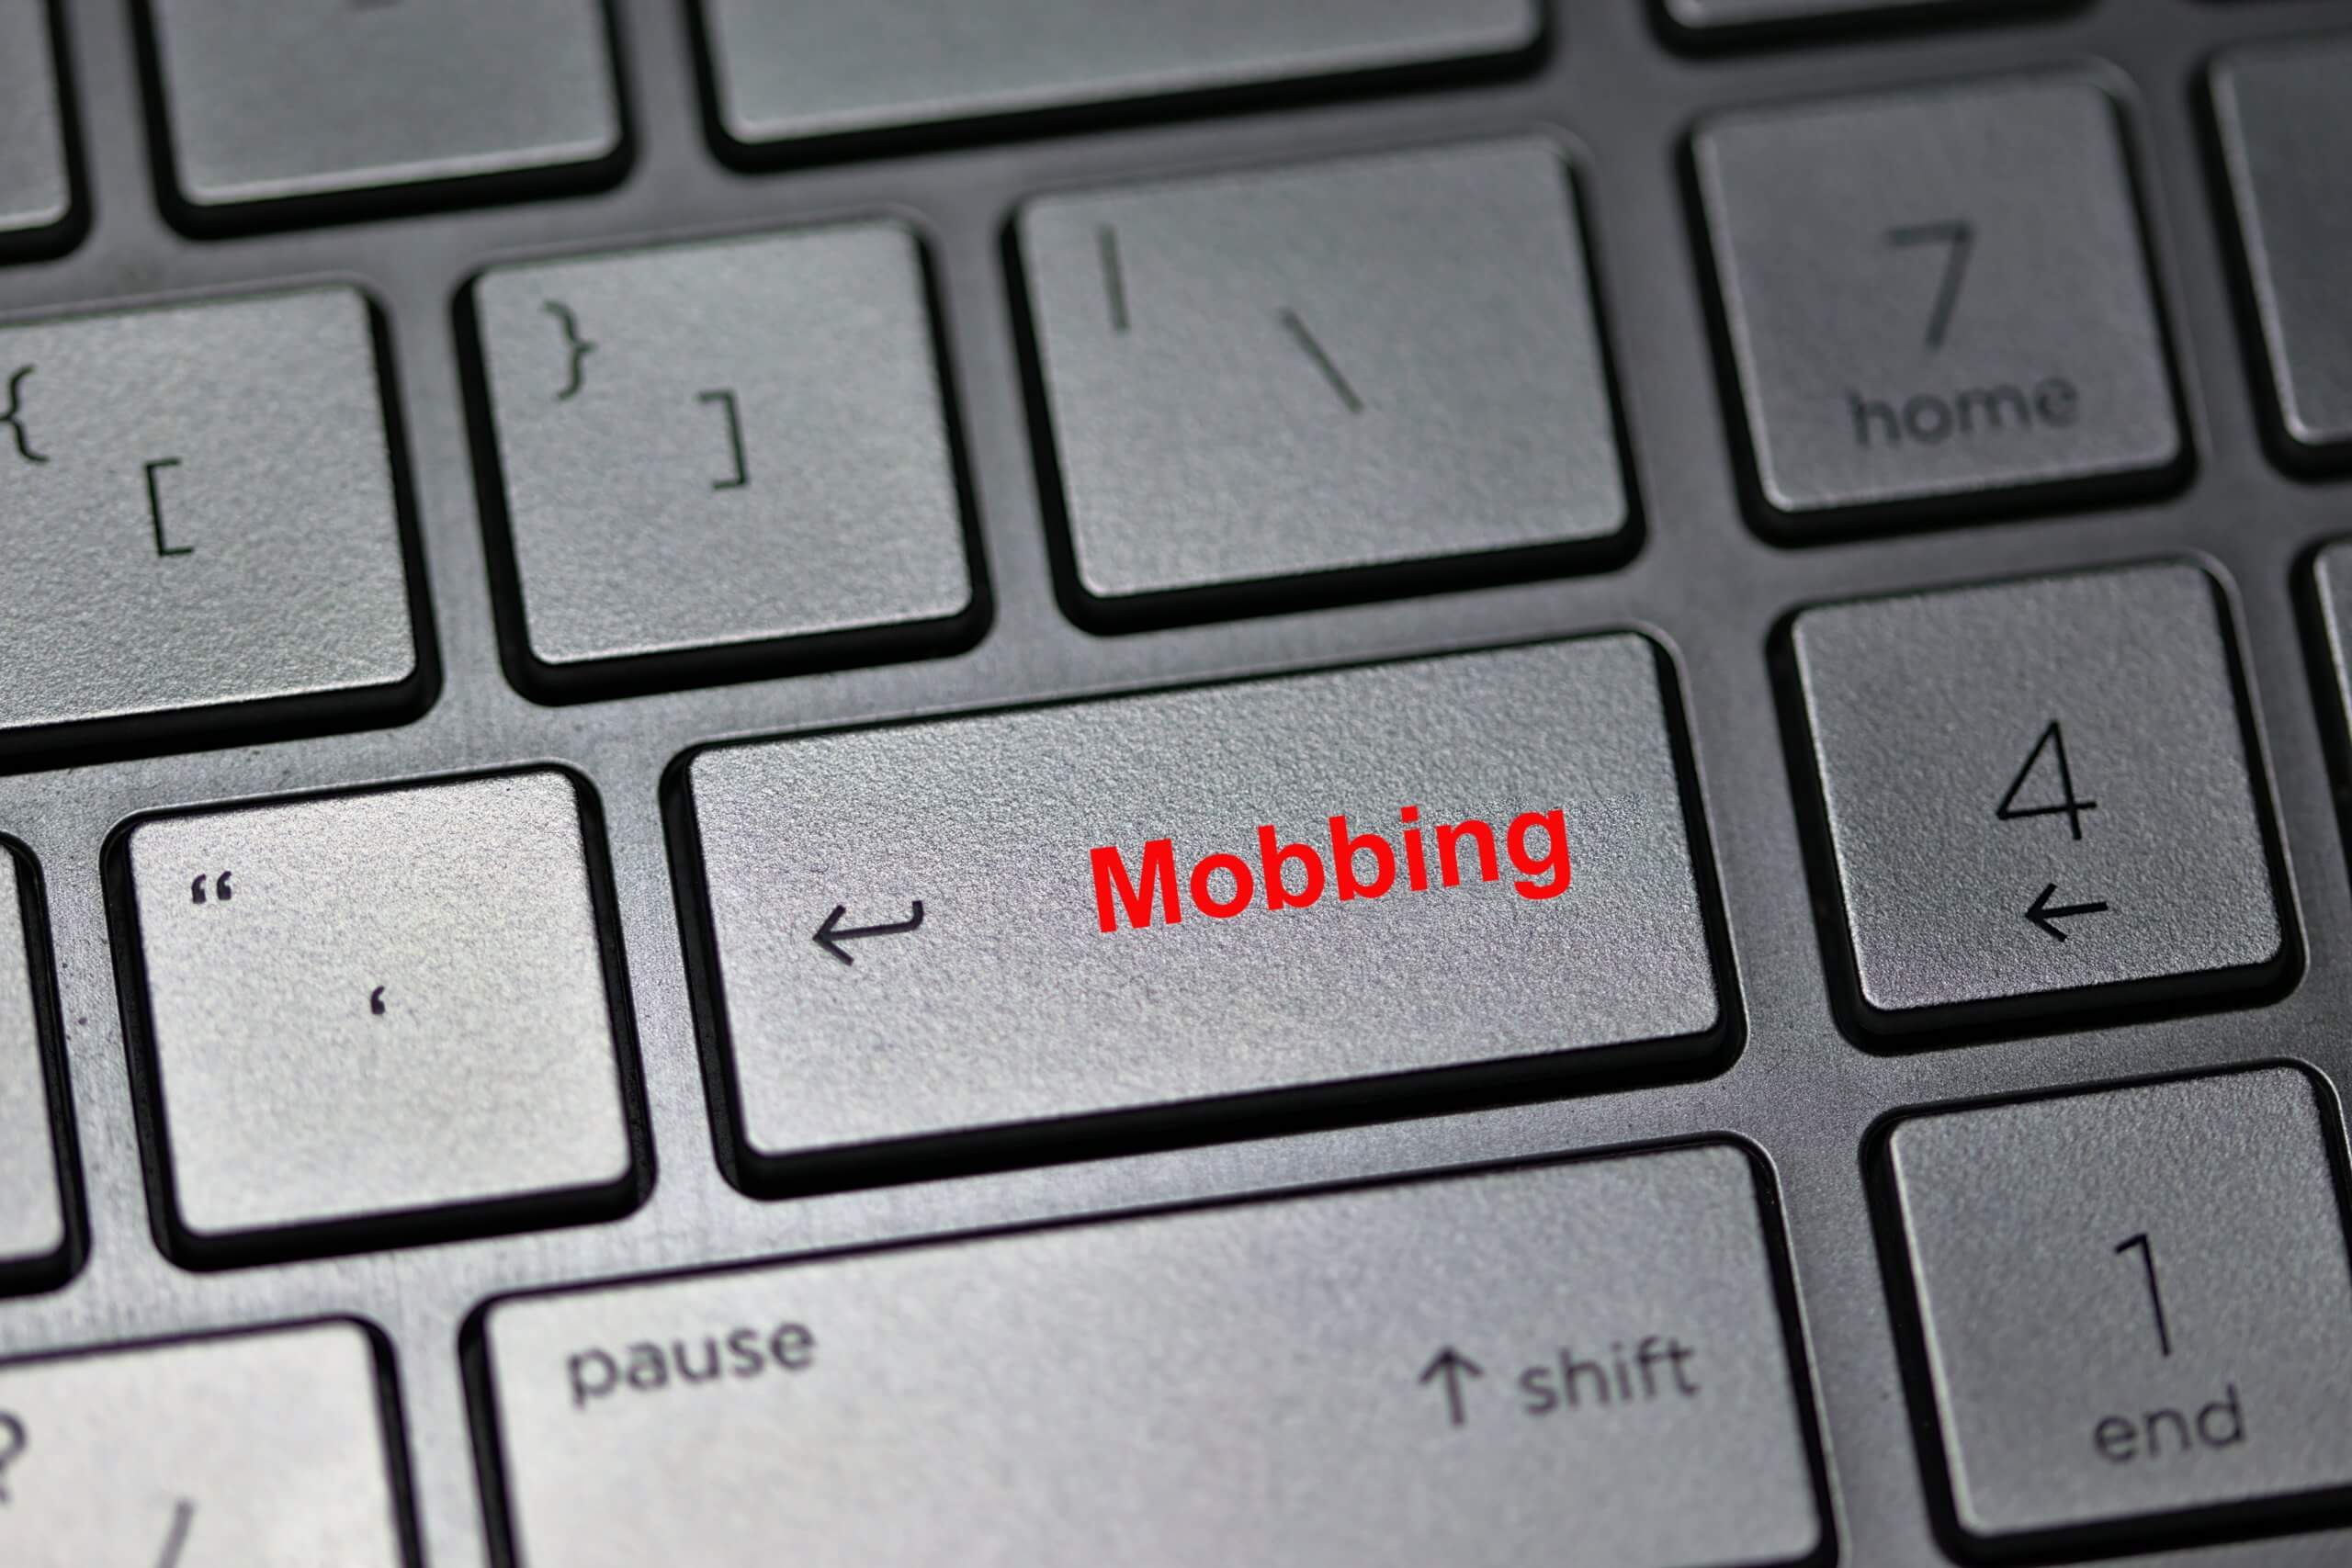 Cyber Mobbing